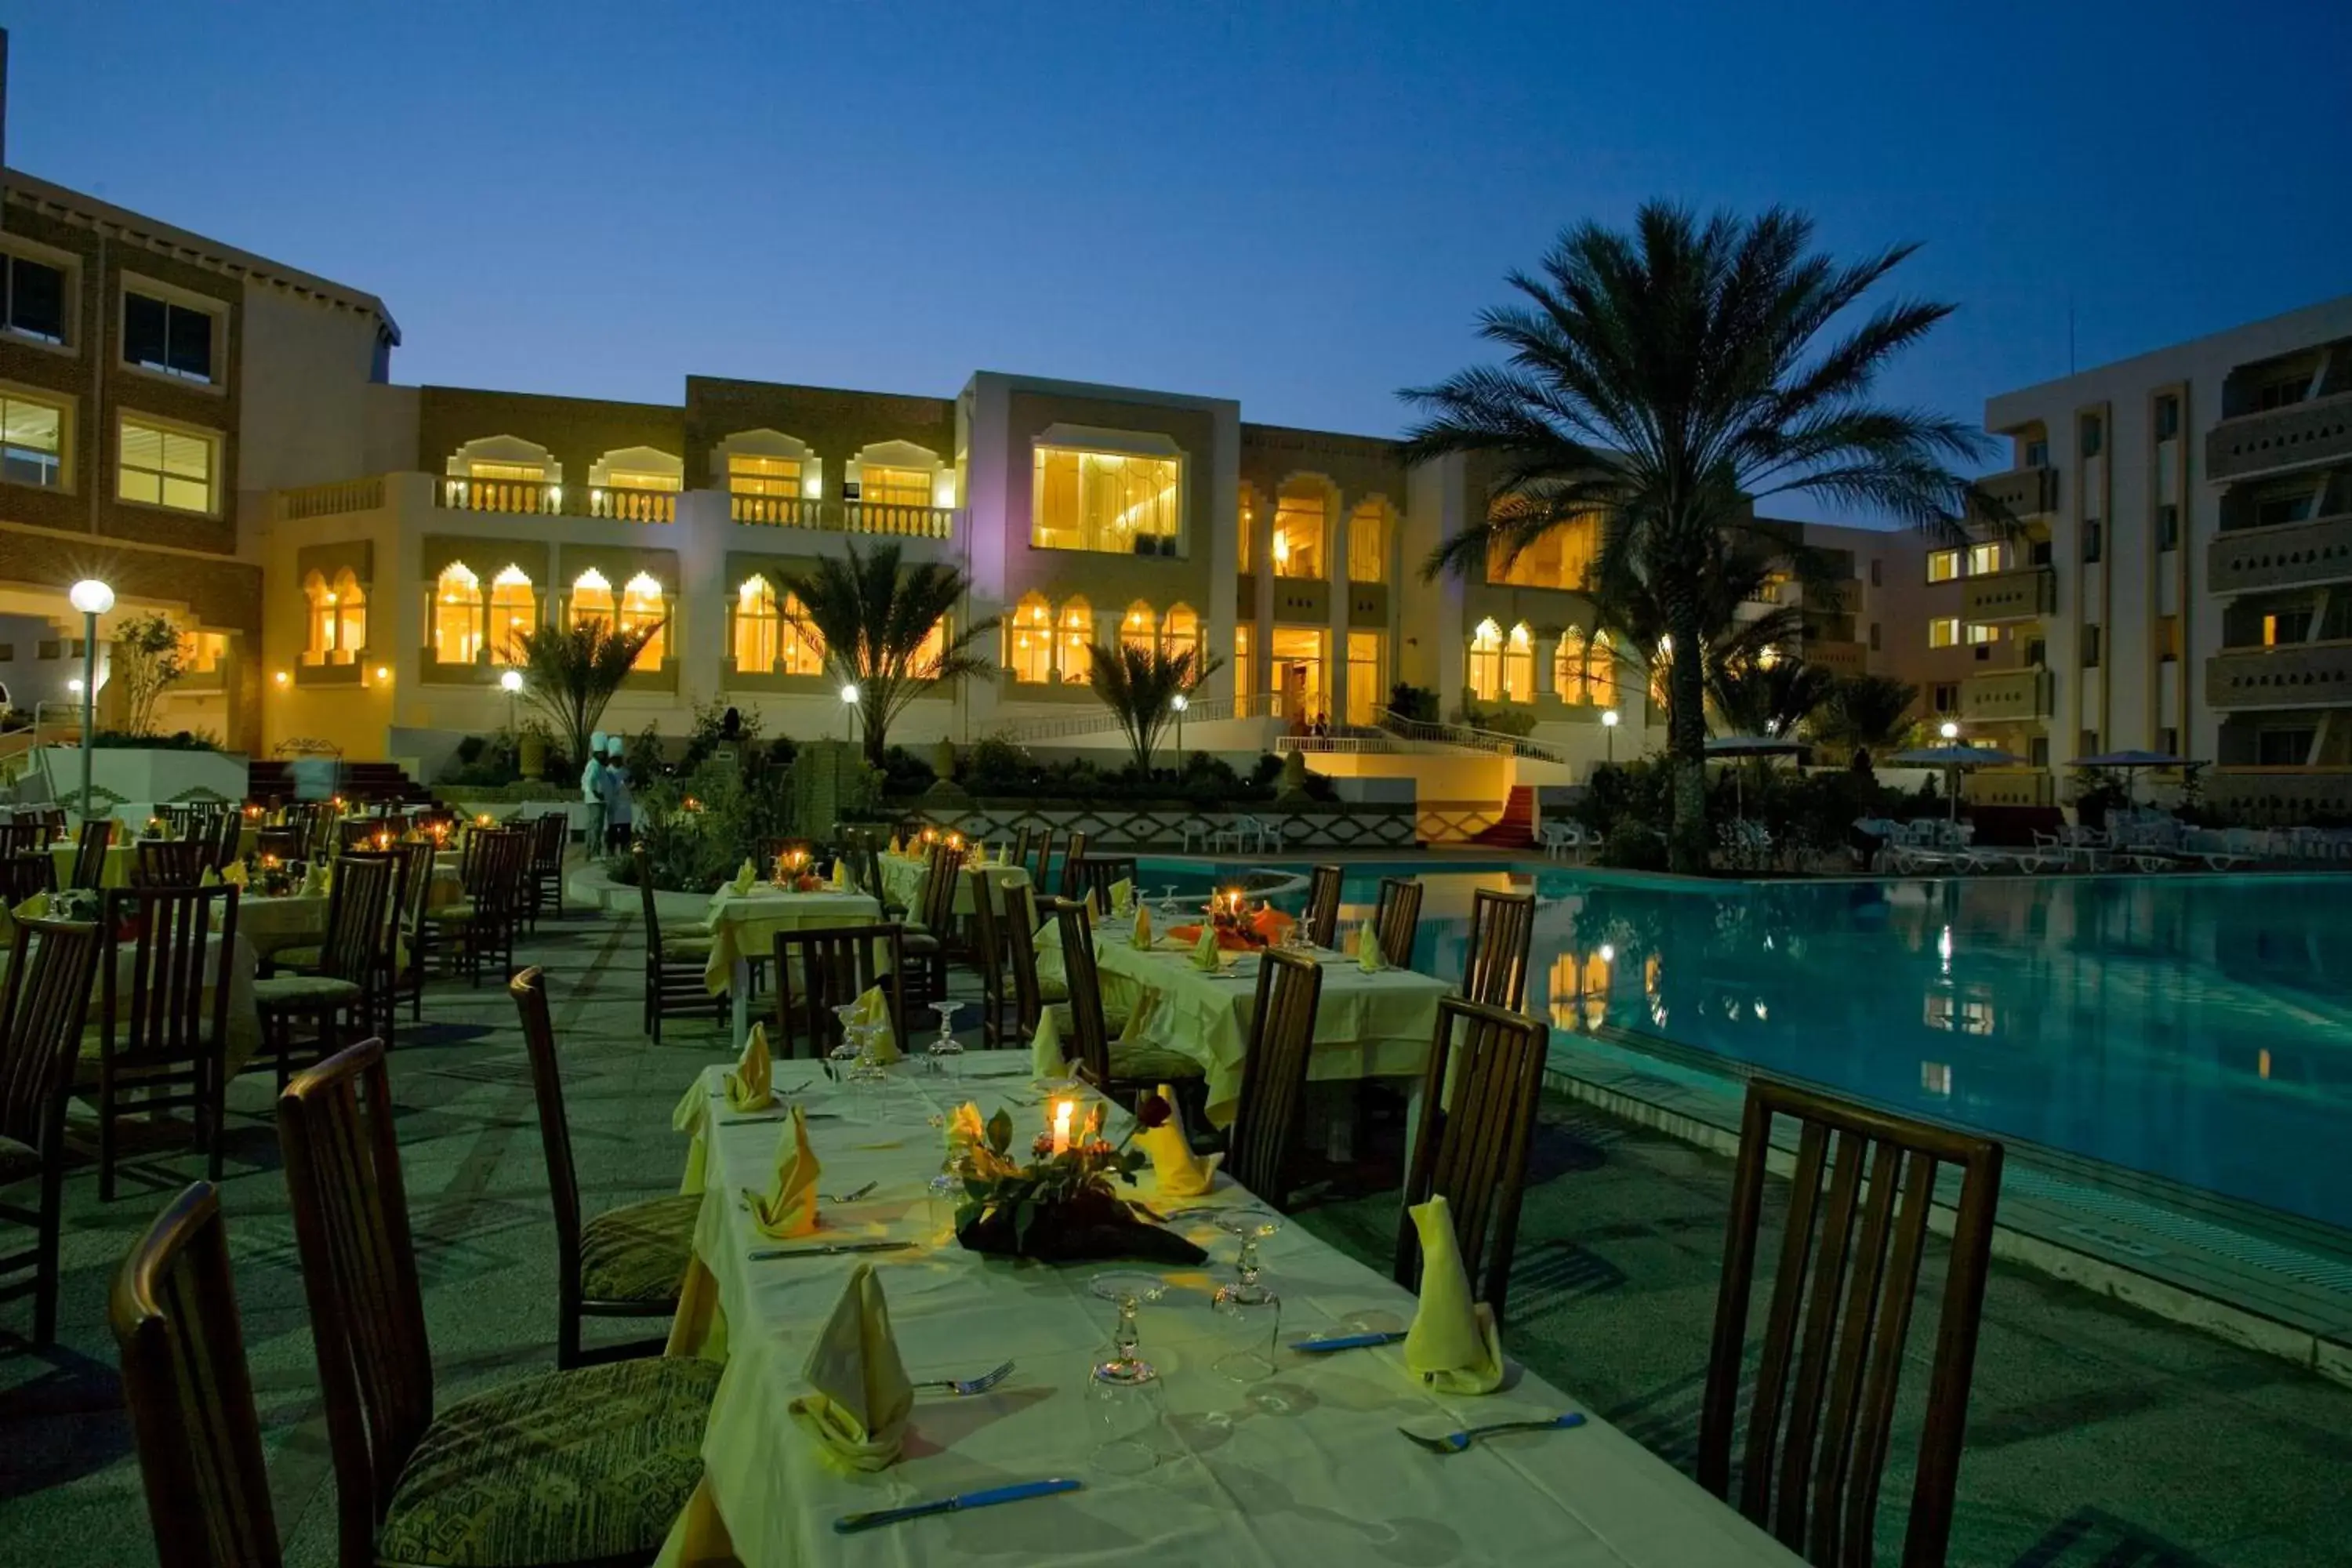 Evening entertainment, Restaurant/Places to Eat in El Mouradi Tozeur